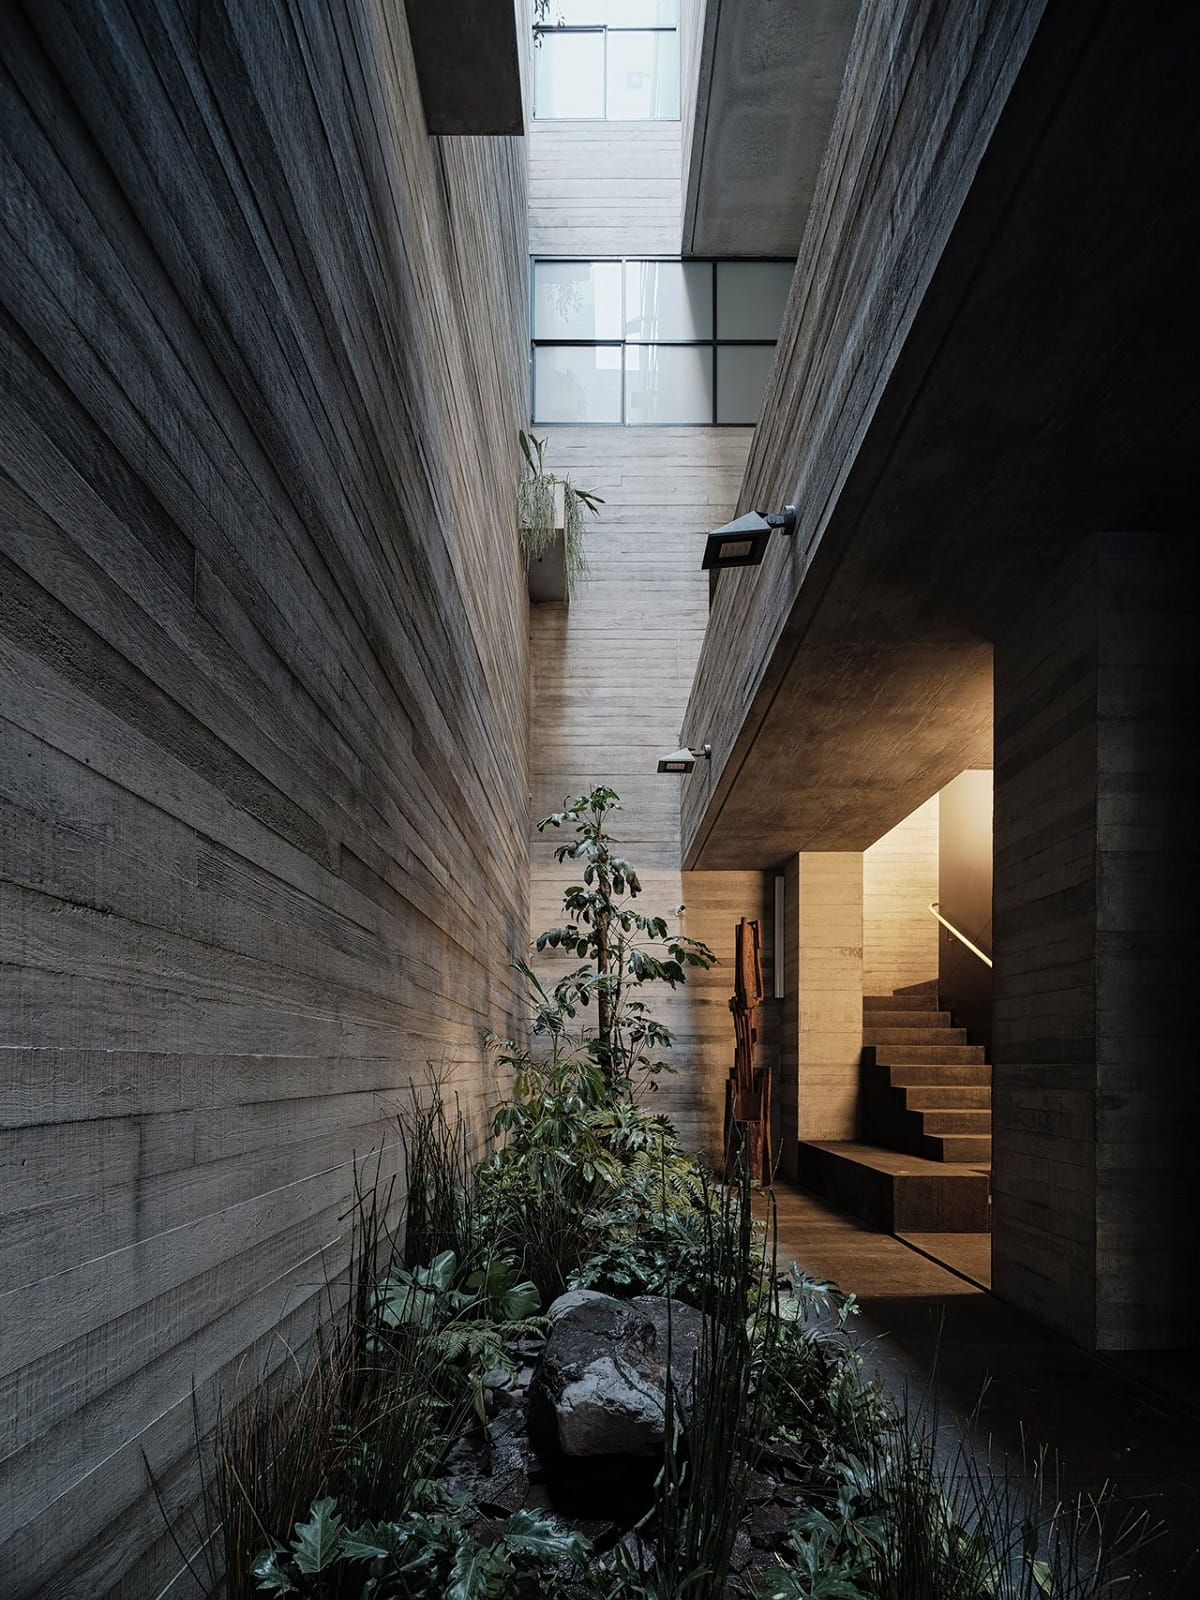 Project: Tennyson 205. Architects: Studio Rick Joy. Landscape Architects: Entorno Taller de Paisaje. Location: Mexico City, Mexico. Photographer: Joe Fletcher
